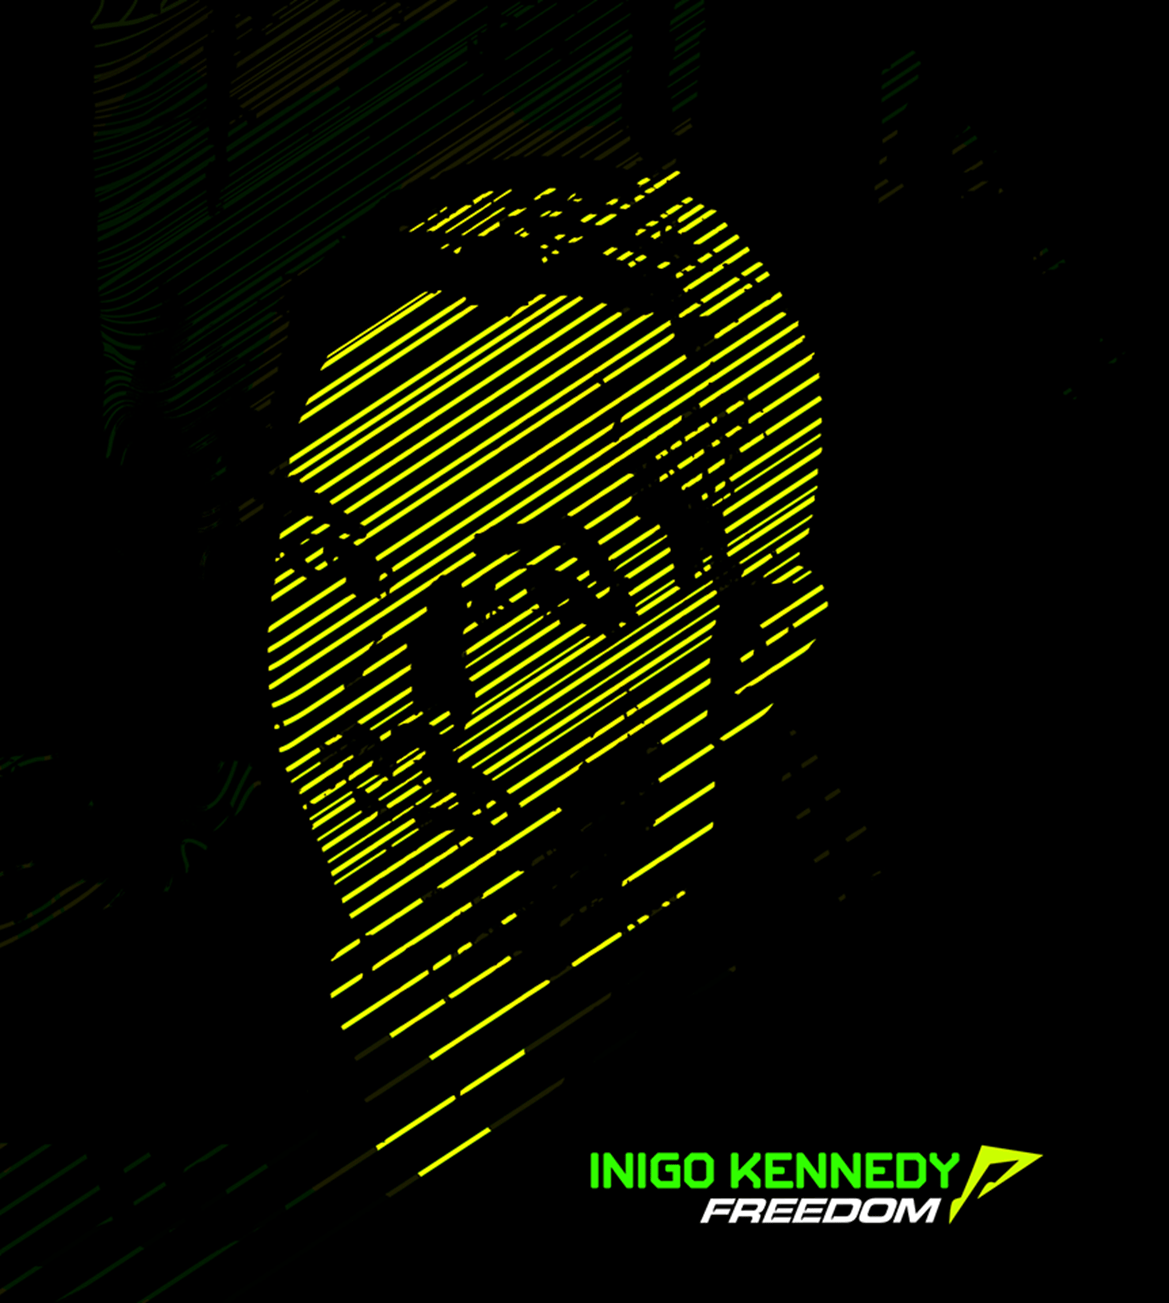 Inigo Kennedy en el FREEDOM 2019